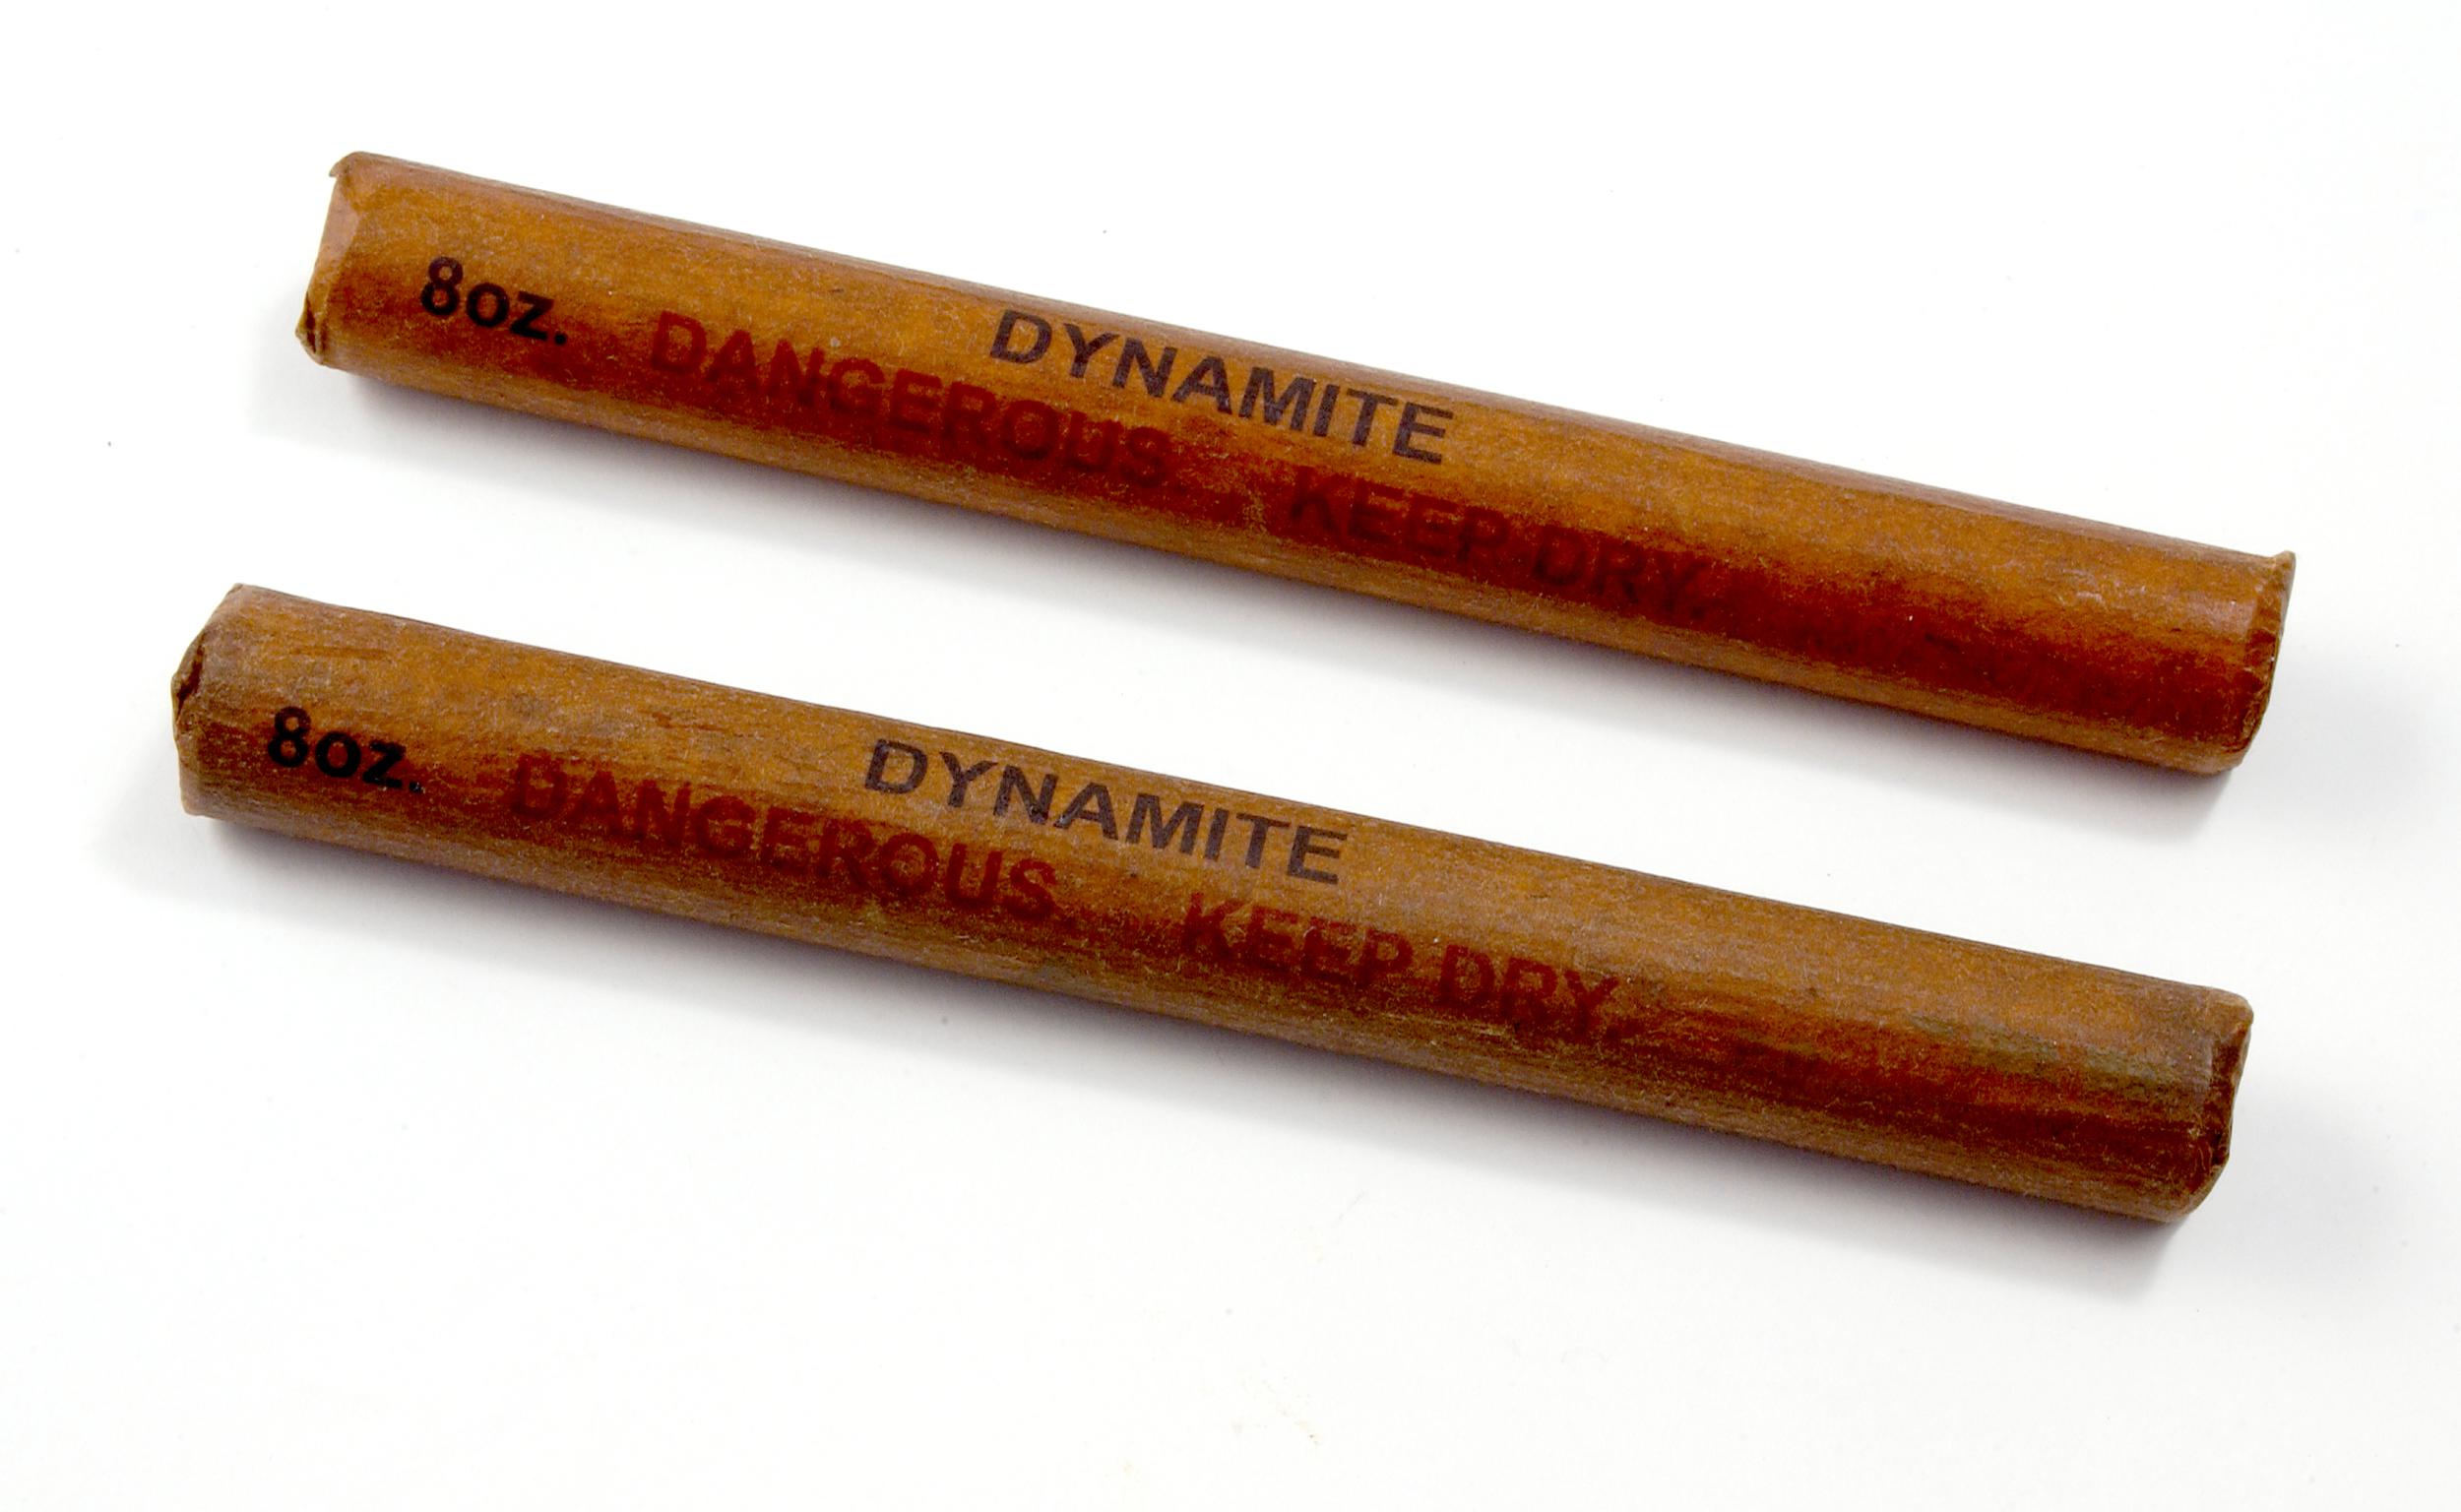 Dummy sticks of dynamite